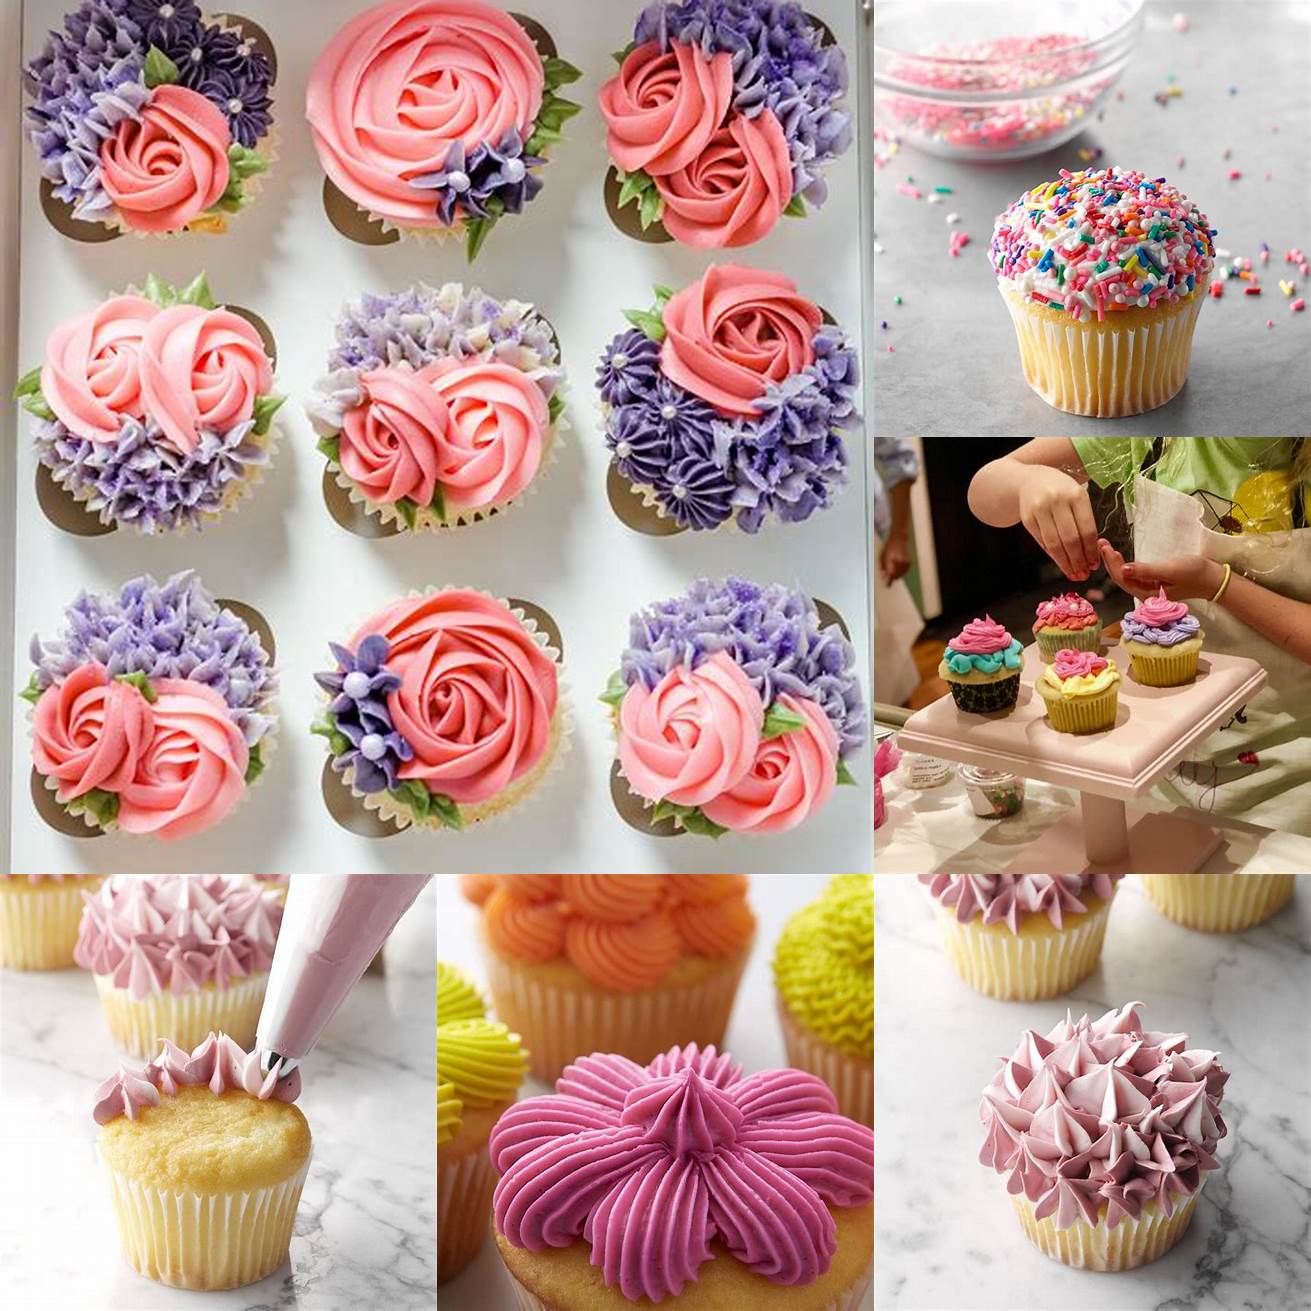 Decorating cupcakes